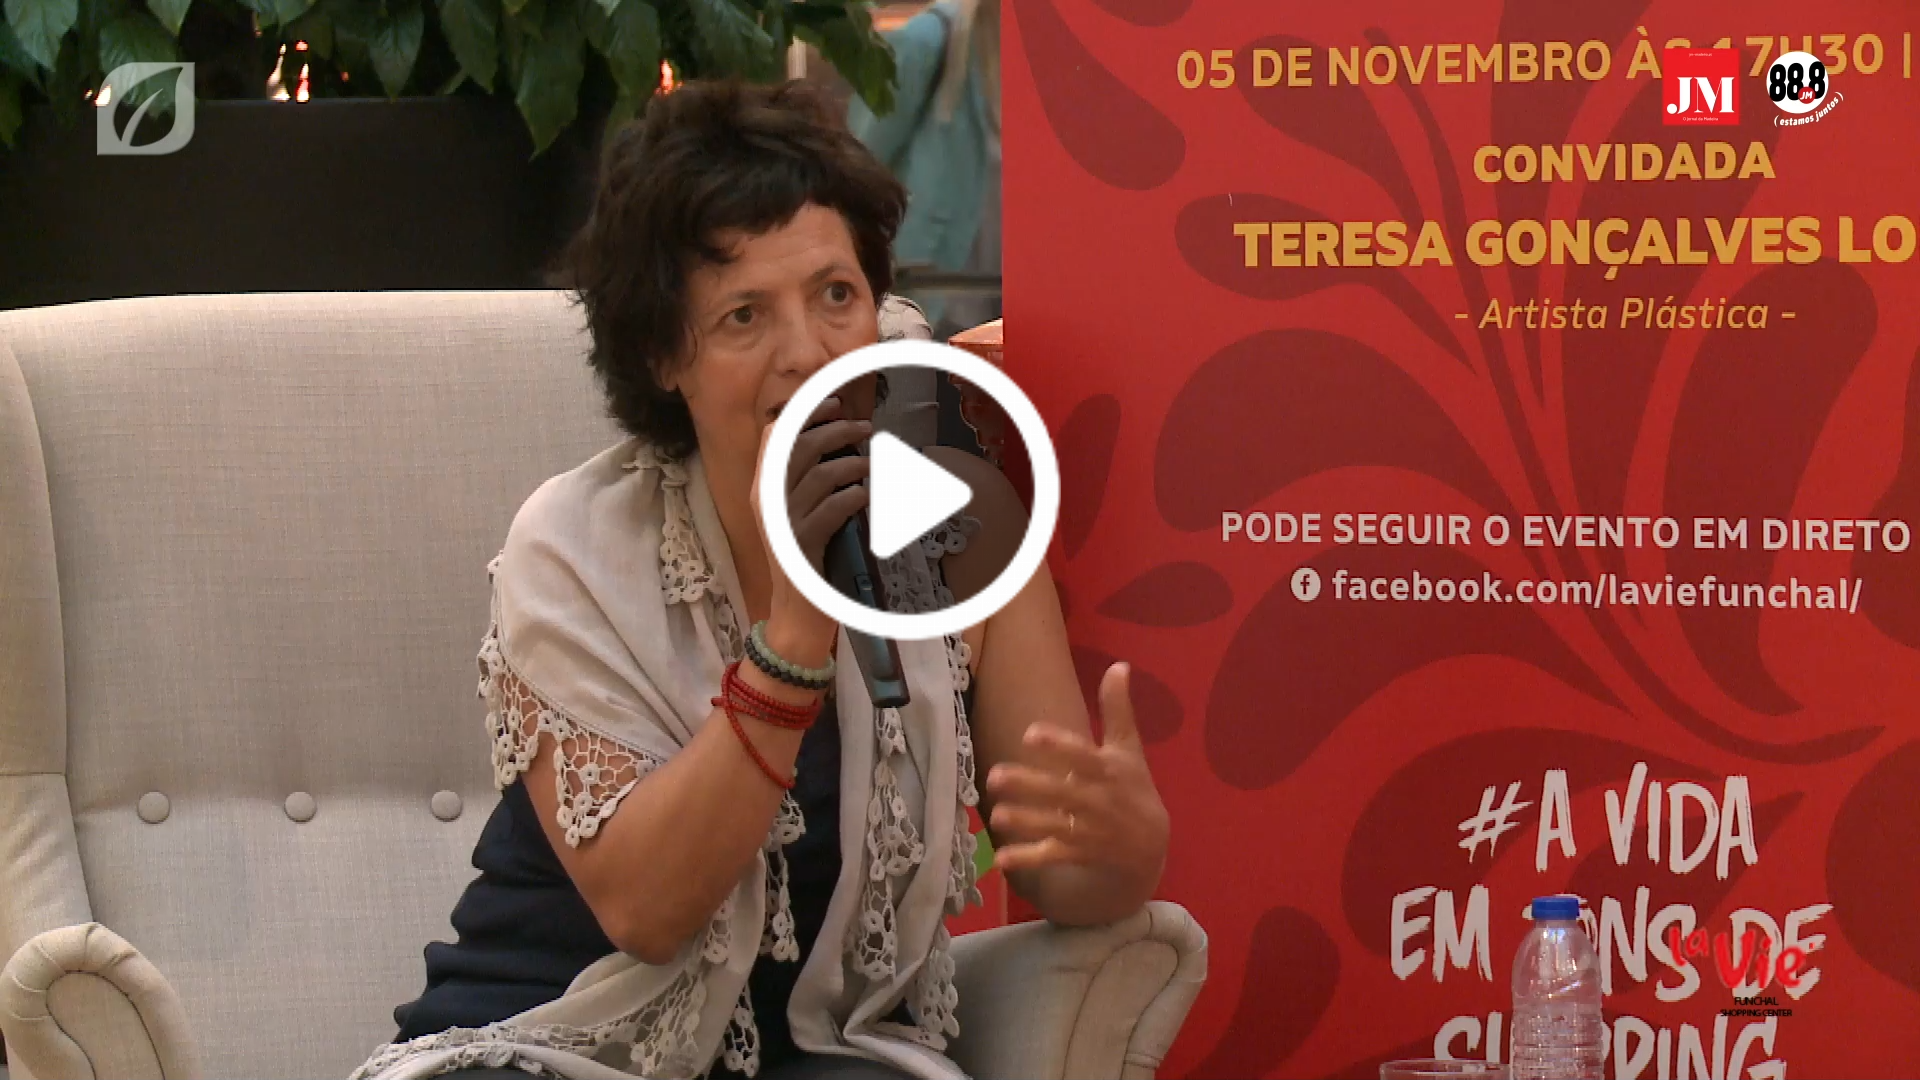 Teresa Gonçalves Lobo: "A arte salva-nos, eleva-nos"